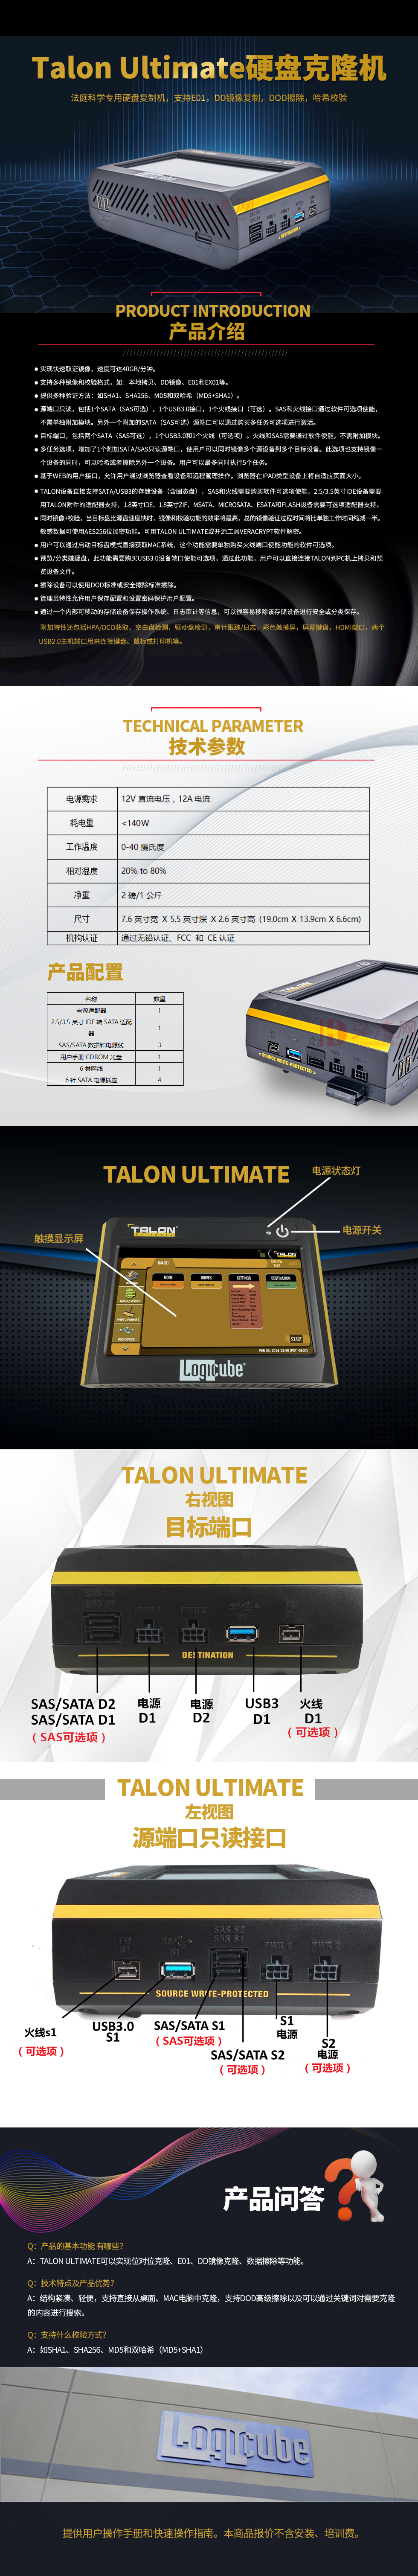 Talon Ultimate硬盘克隆机,硬盘复制机.jpg